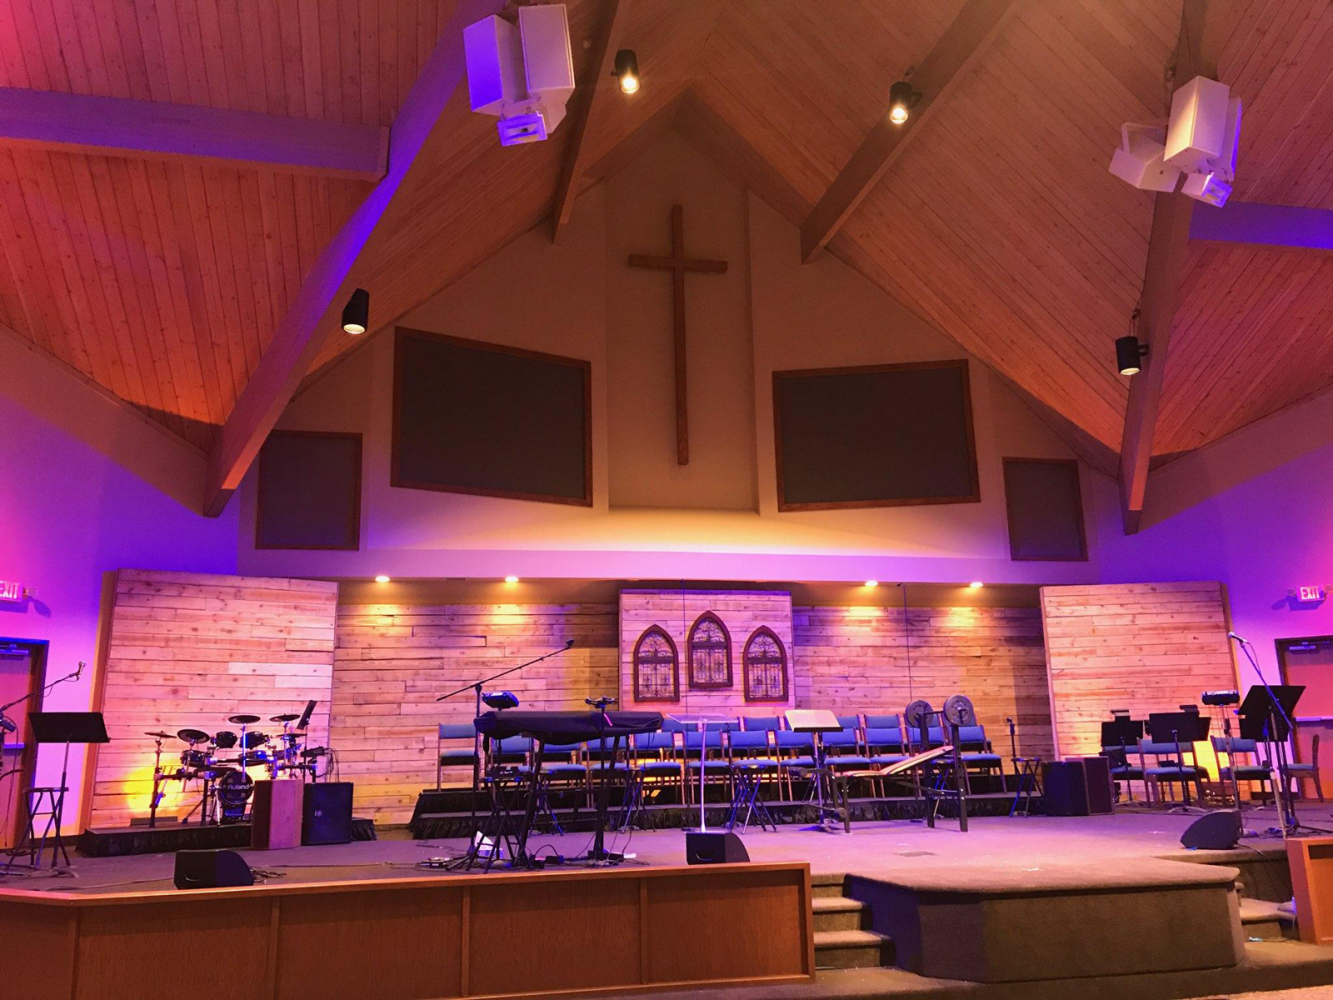 Richfield Church of the Nazarene in Otisville, Michigan